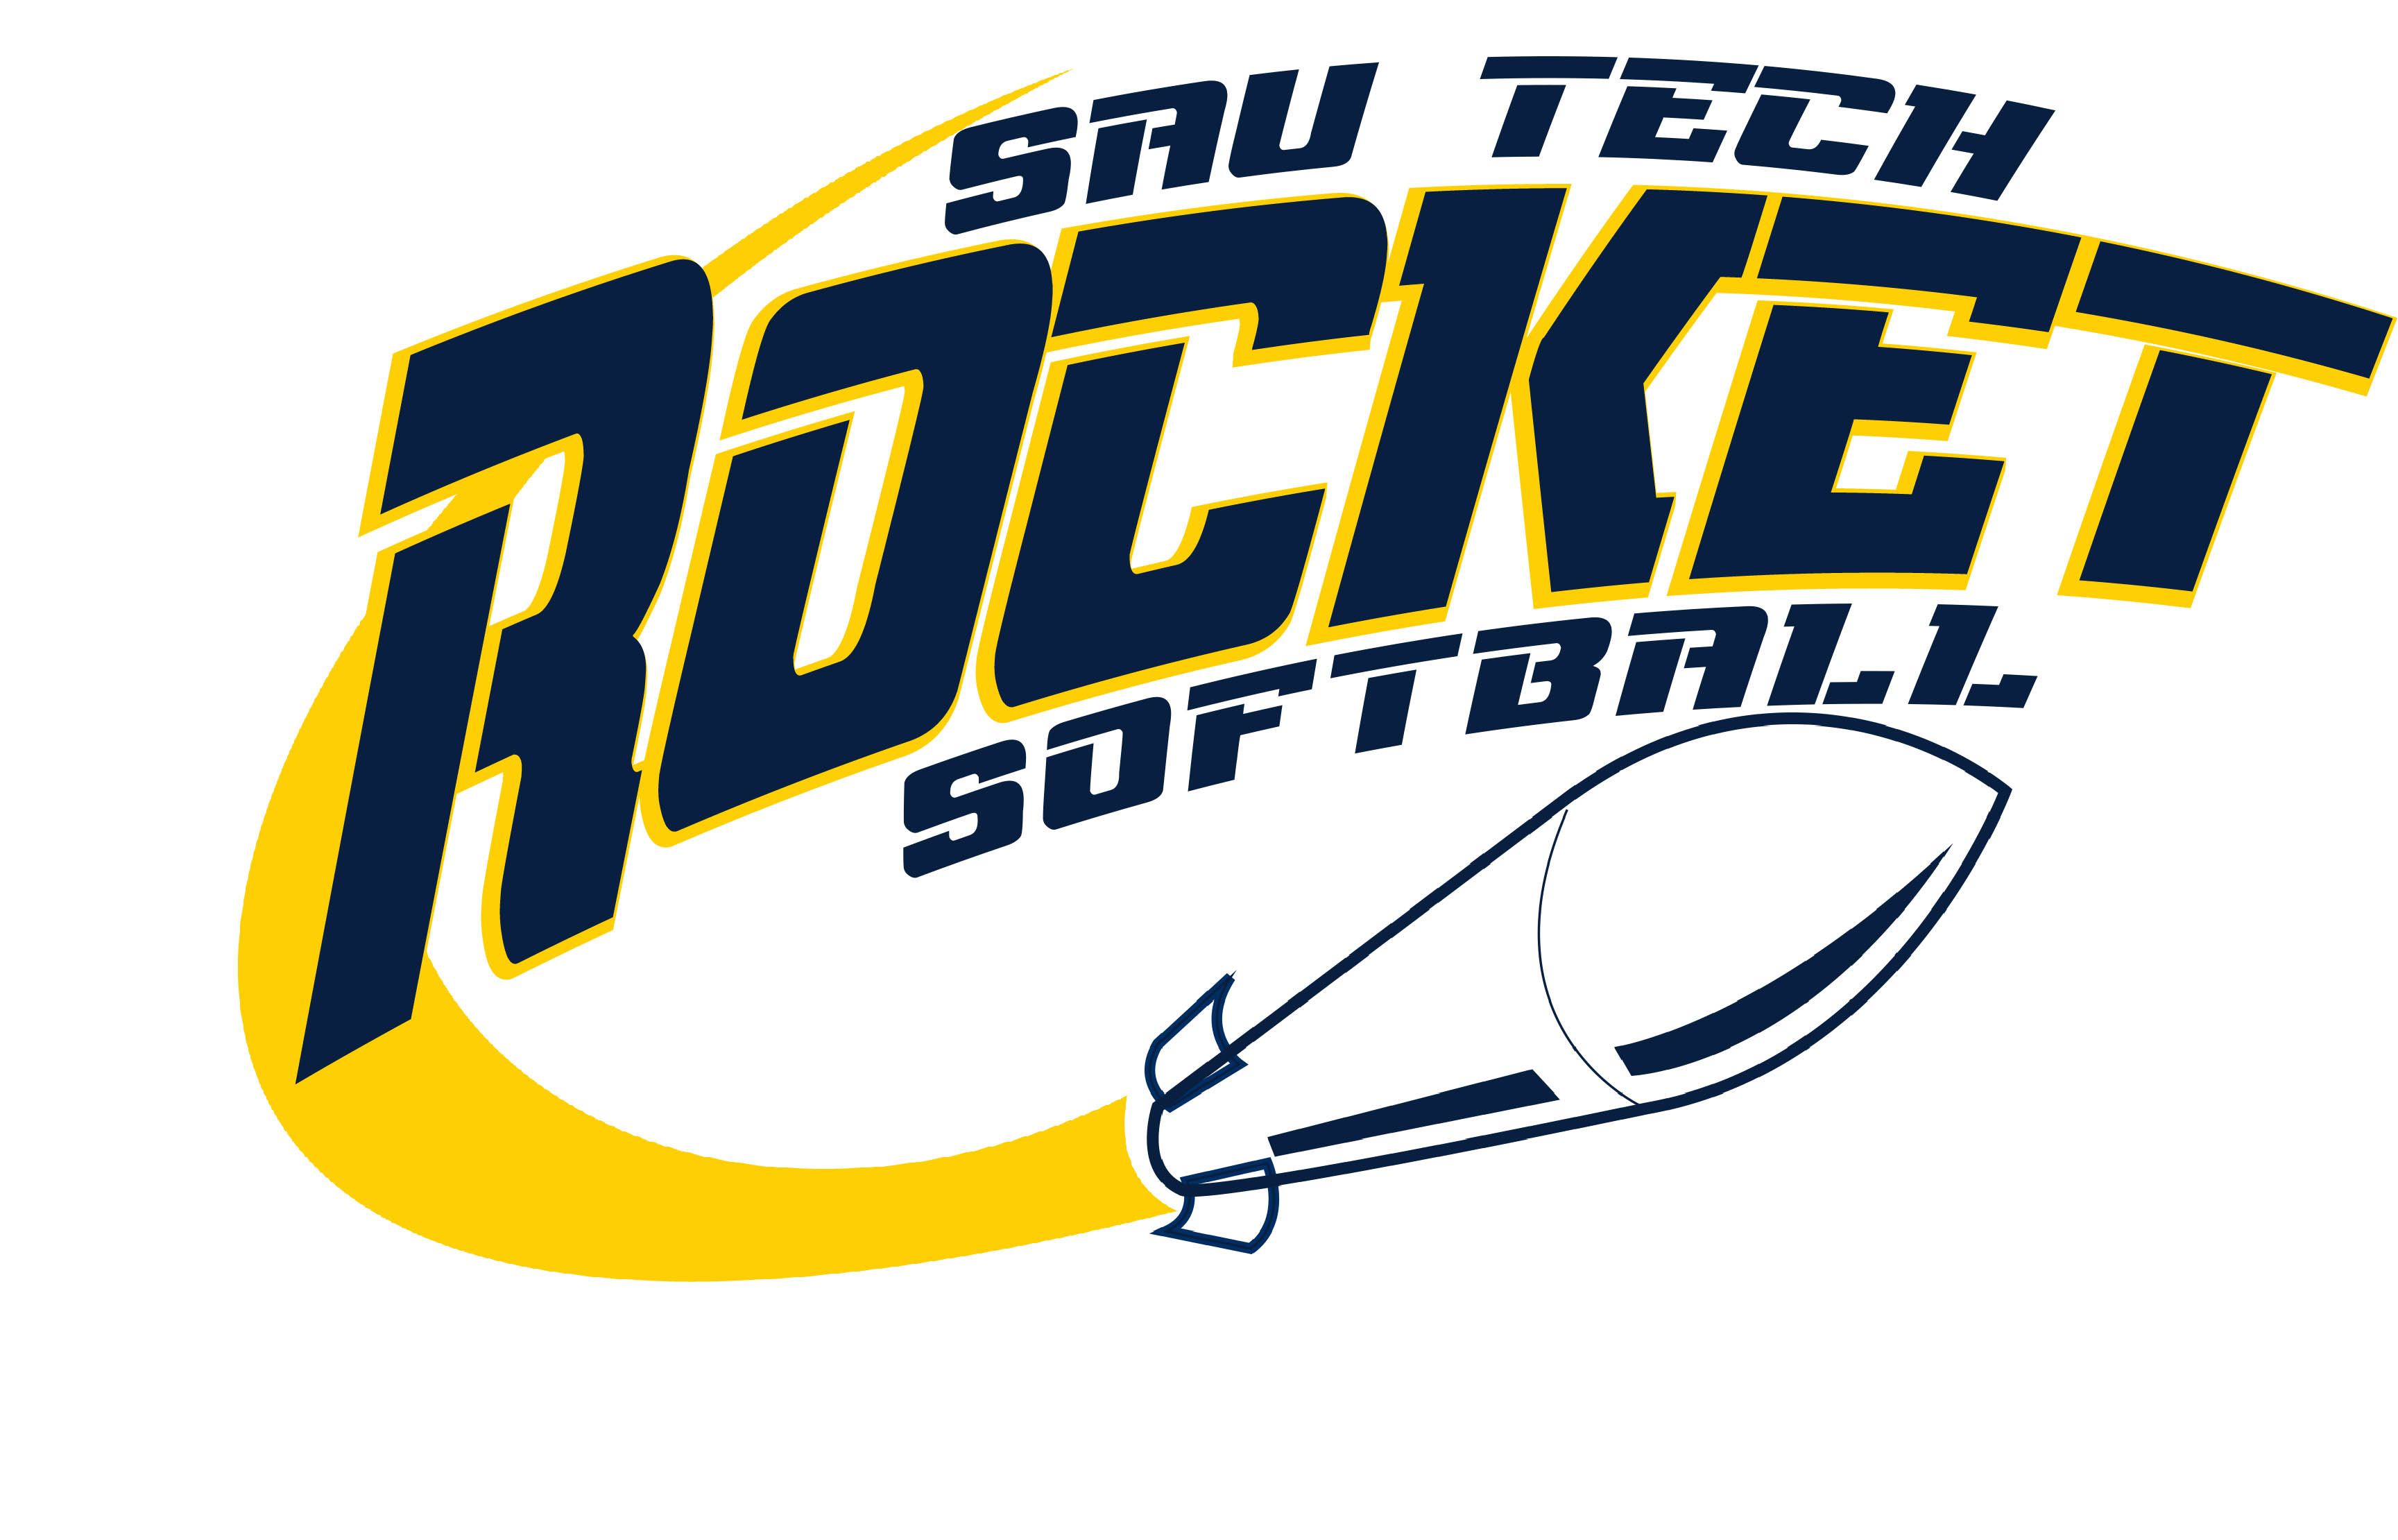 sau tech rocket softball text with rocket